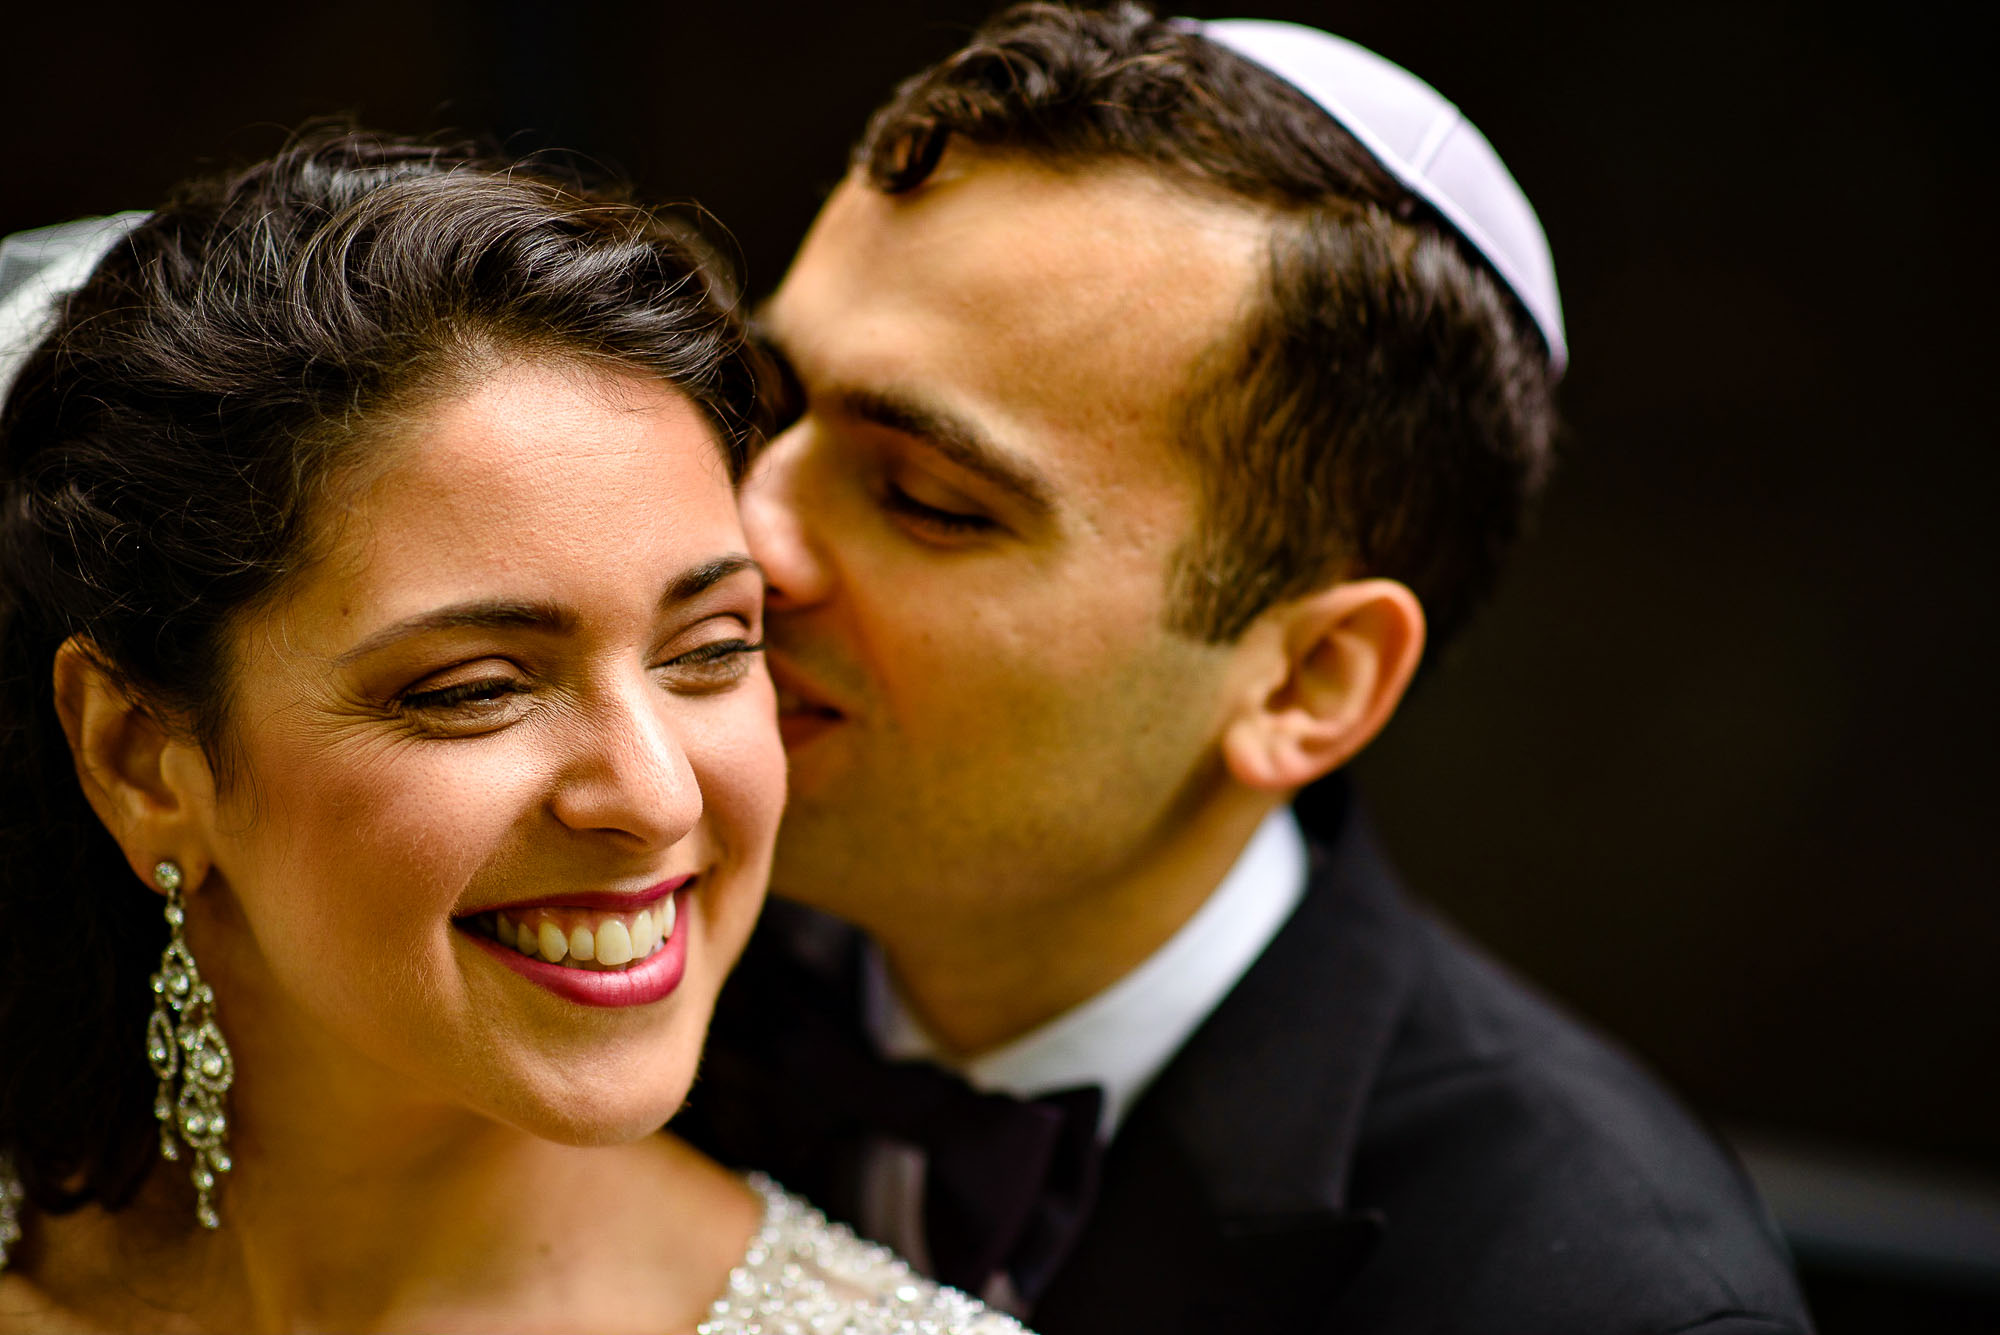 The Sephardic Temple wedding portrait